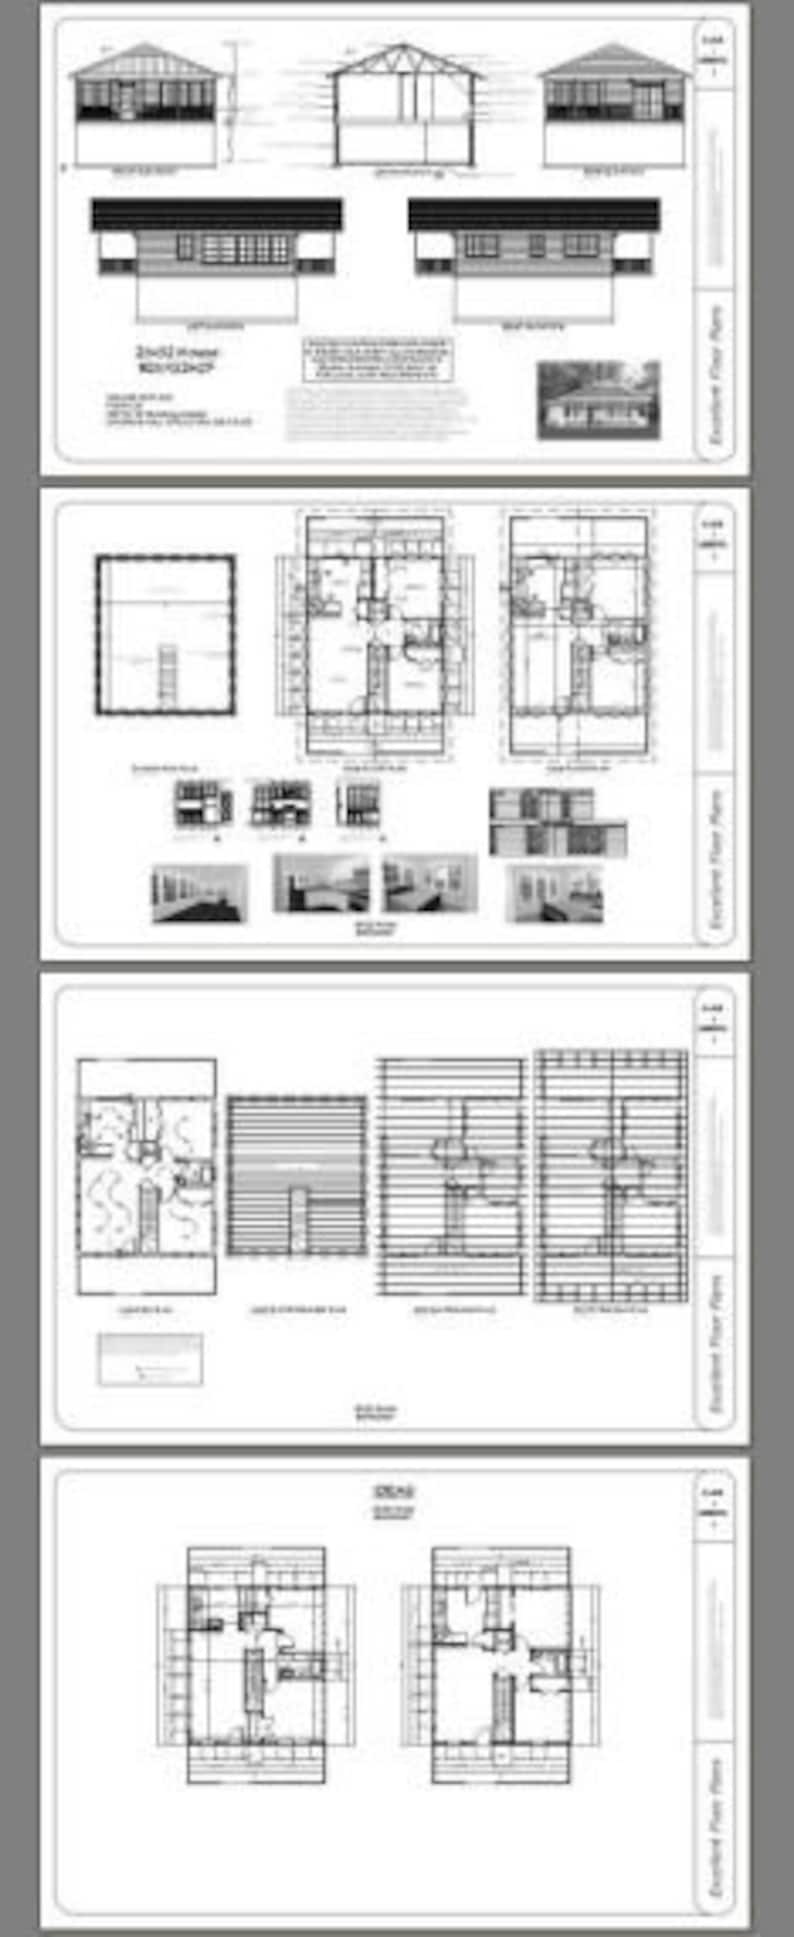 28x32 House 2-bedroom 1-bath 848 Sq Ft PDF Floor Plan Instant Download ...